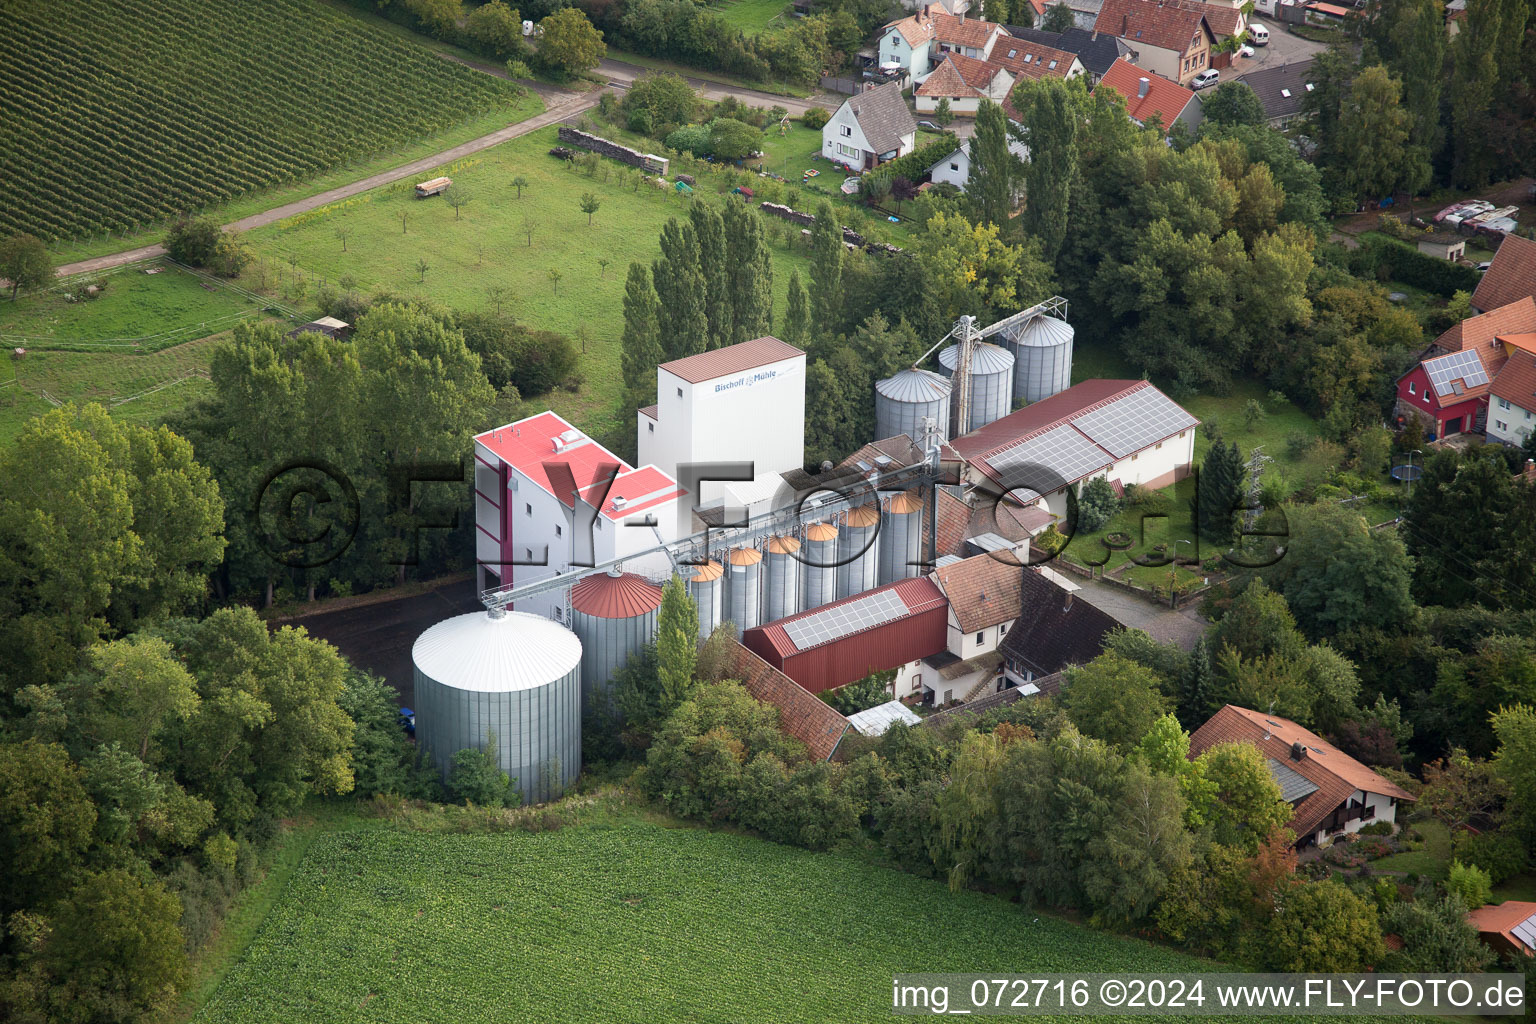 Ludwigs mill in the district Ingenheim in Billigheim-Ingenheim in the state Rhineland-Palatinate